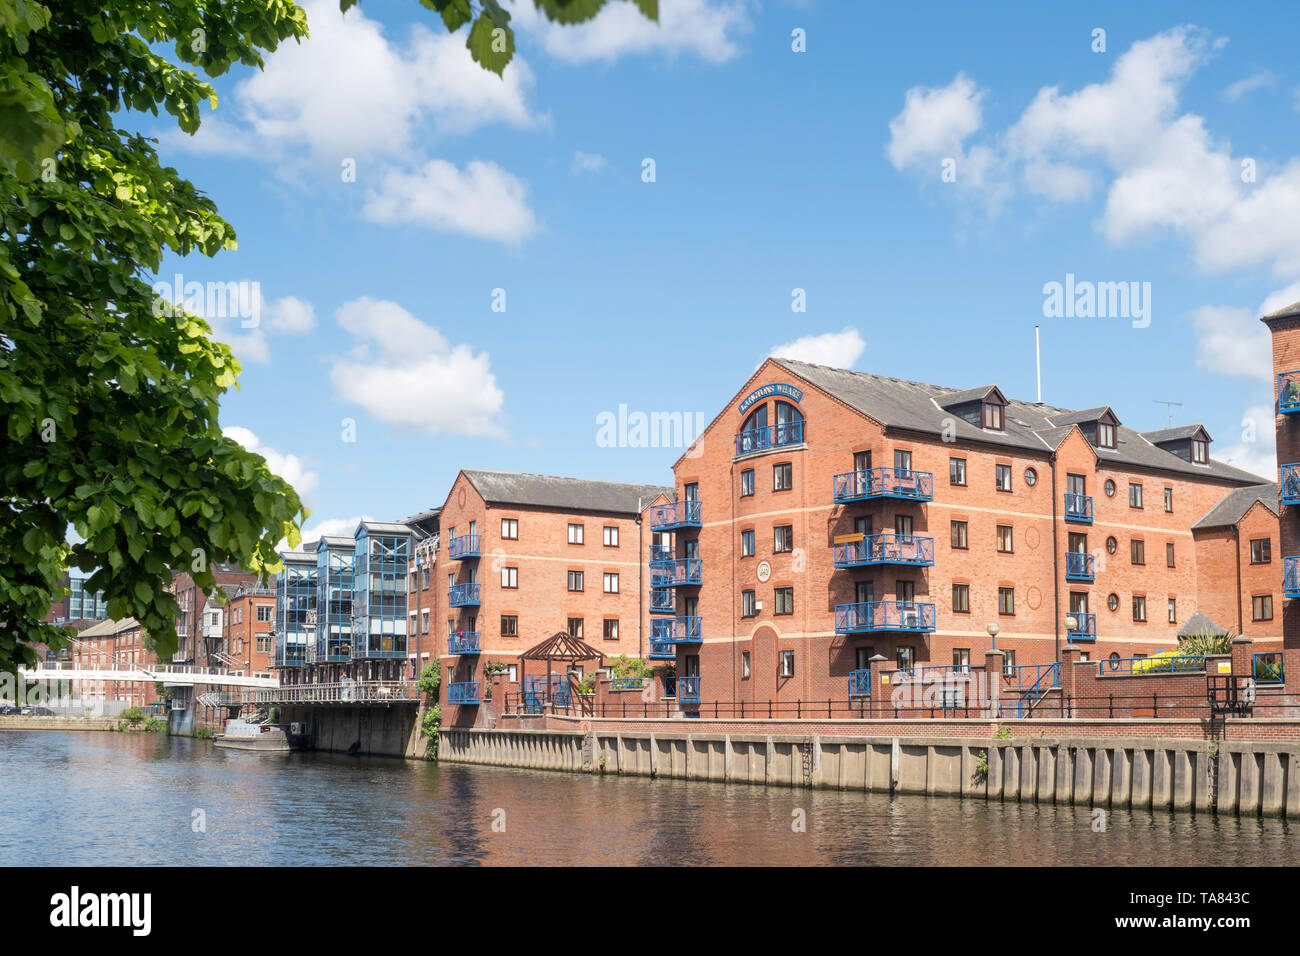 Langtons Wharf Wohngebiet Waterfront Development am Fluss Aire in Leeds, Yorkshire, England, Großbritannien Stockfoto